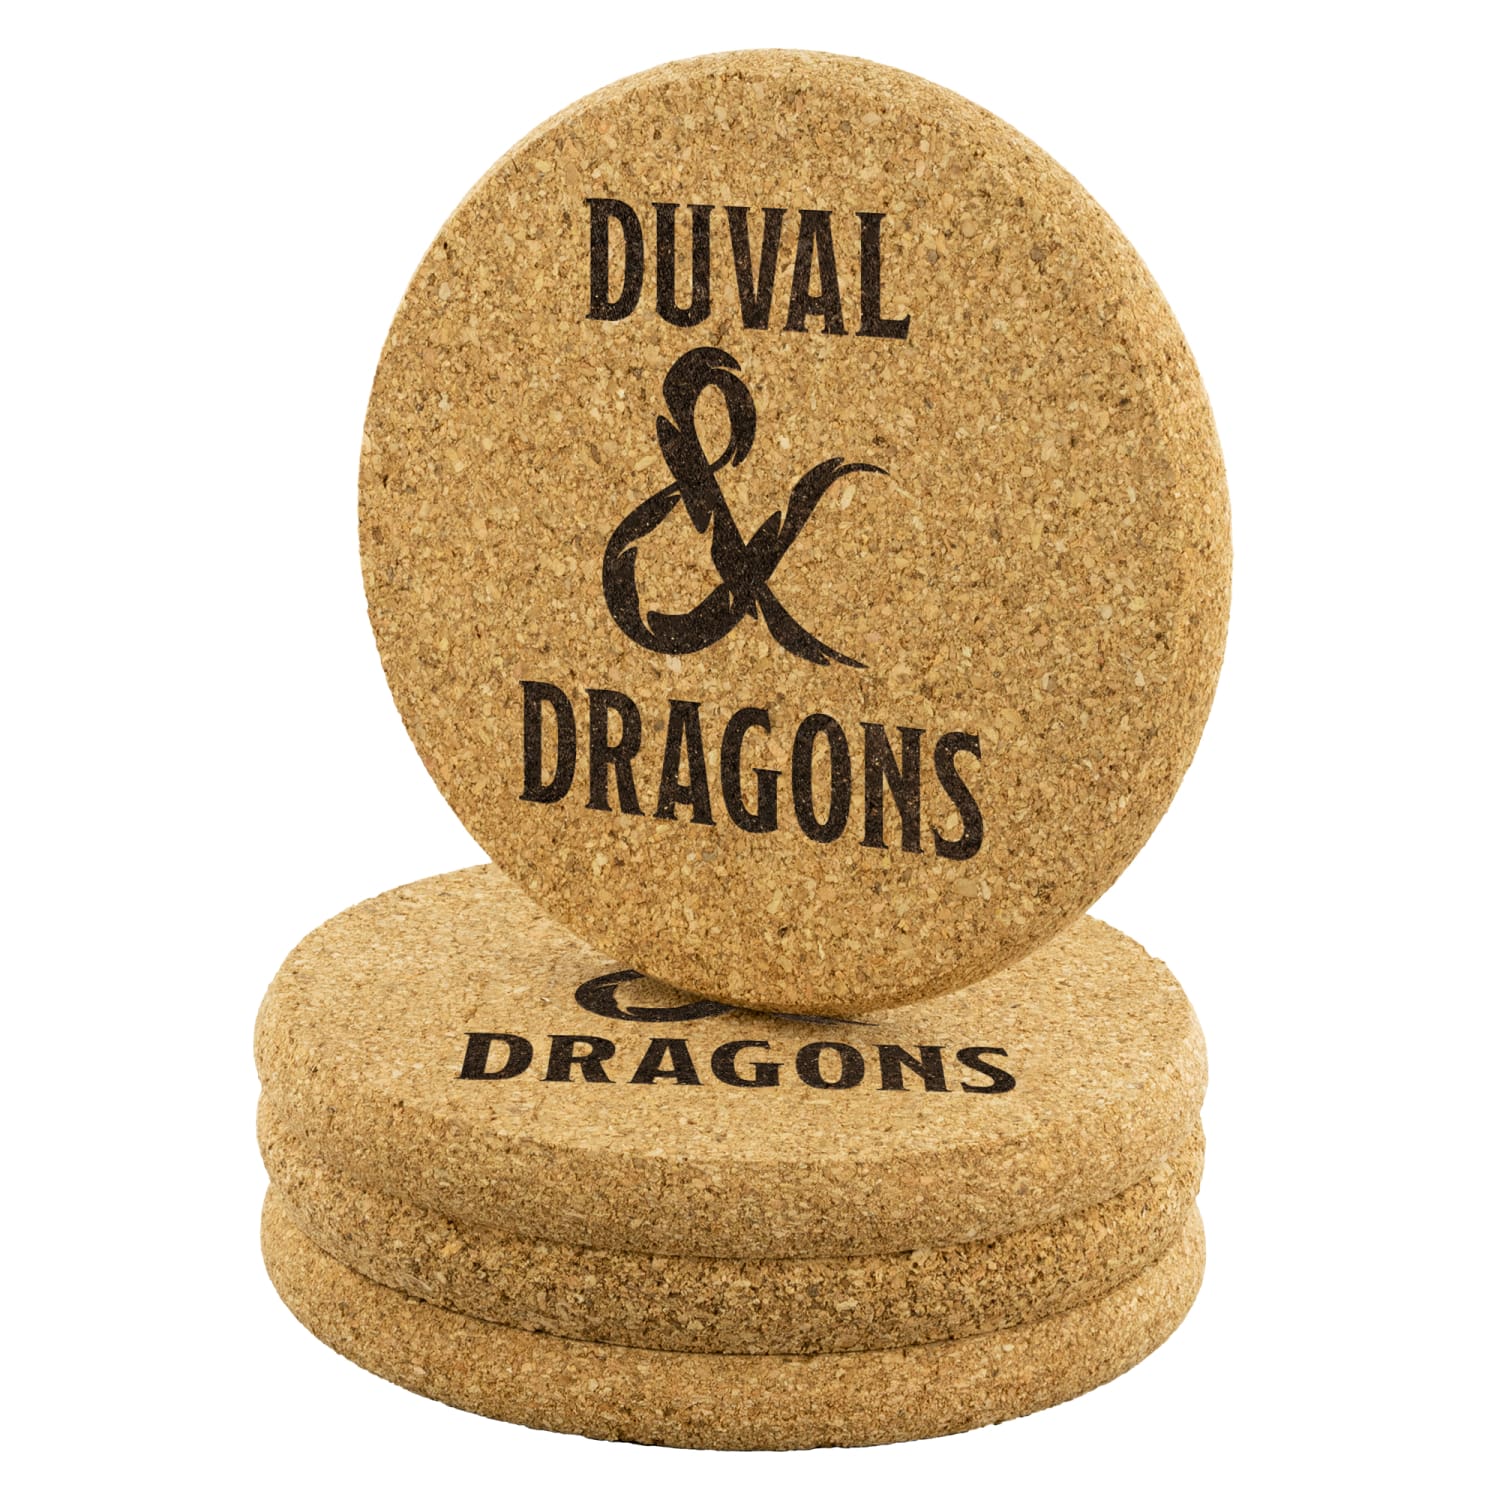 Duval & Dragons Logo Round Cork Coaster Set of 4 - Round Cork Coaster - 4pc - Coasters